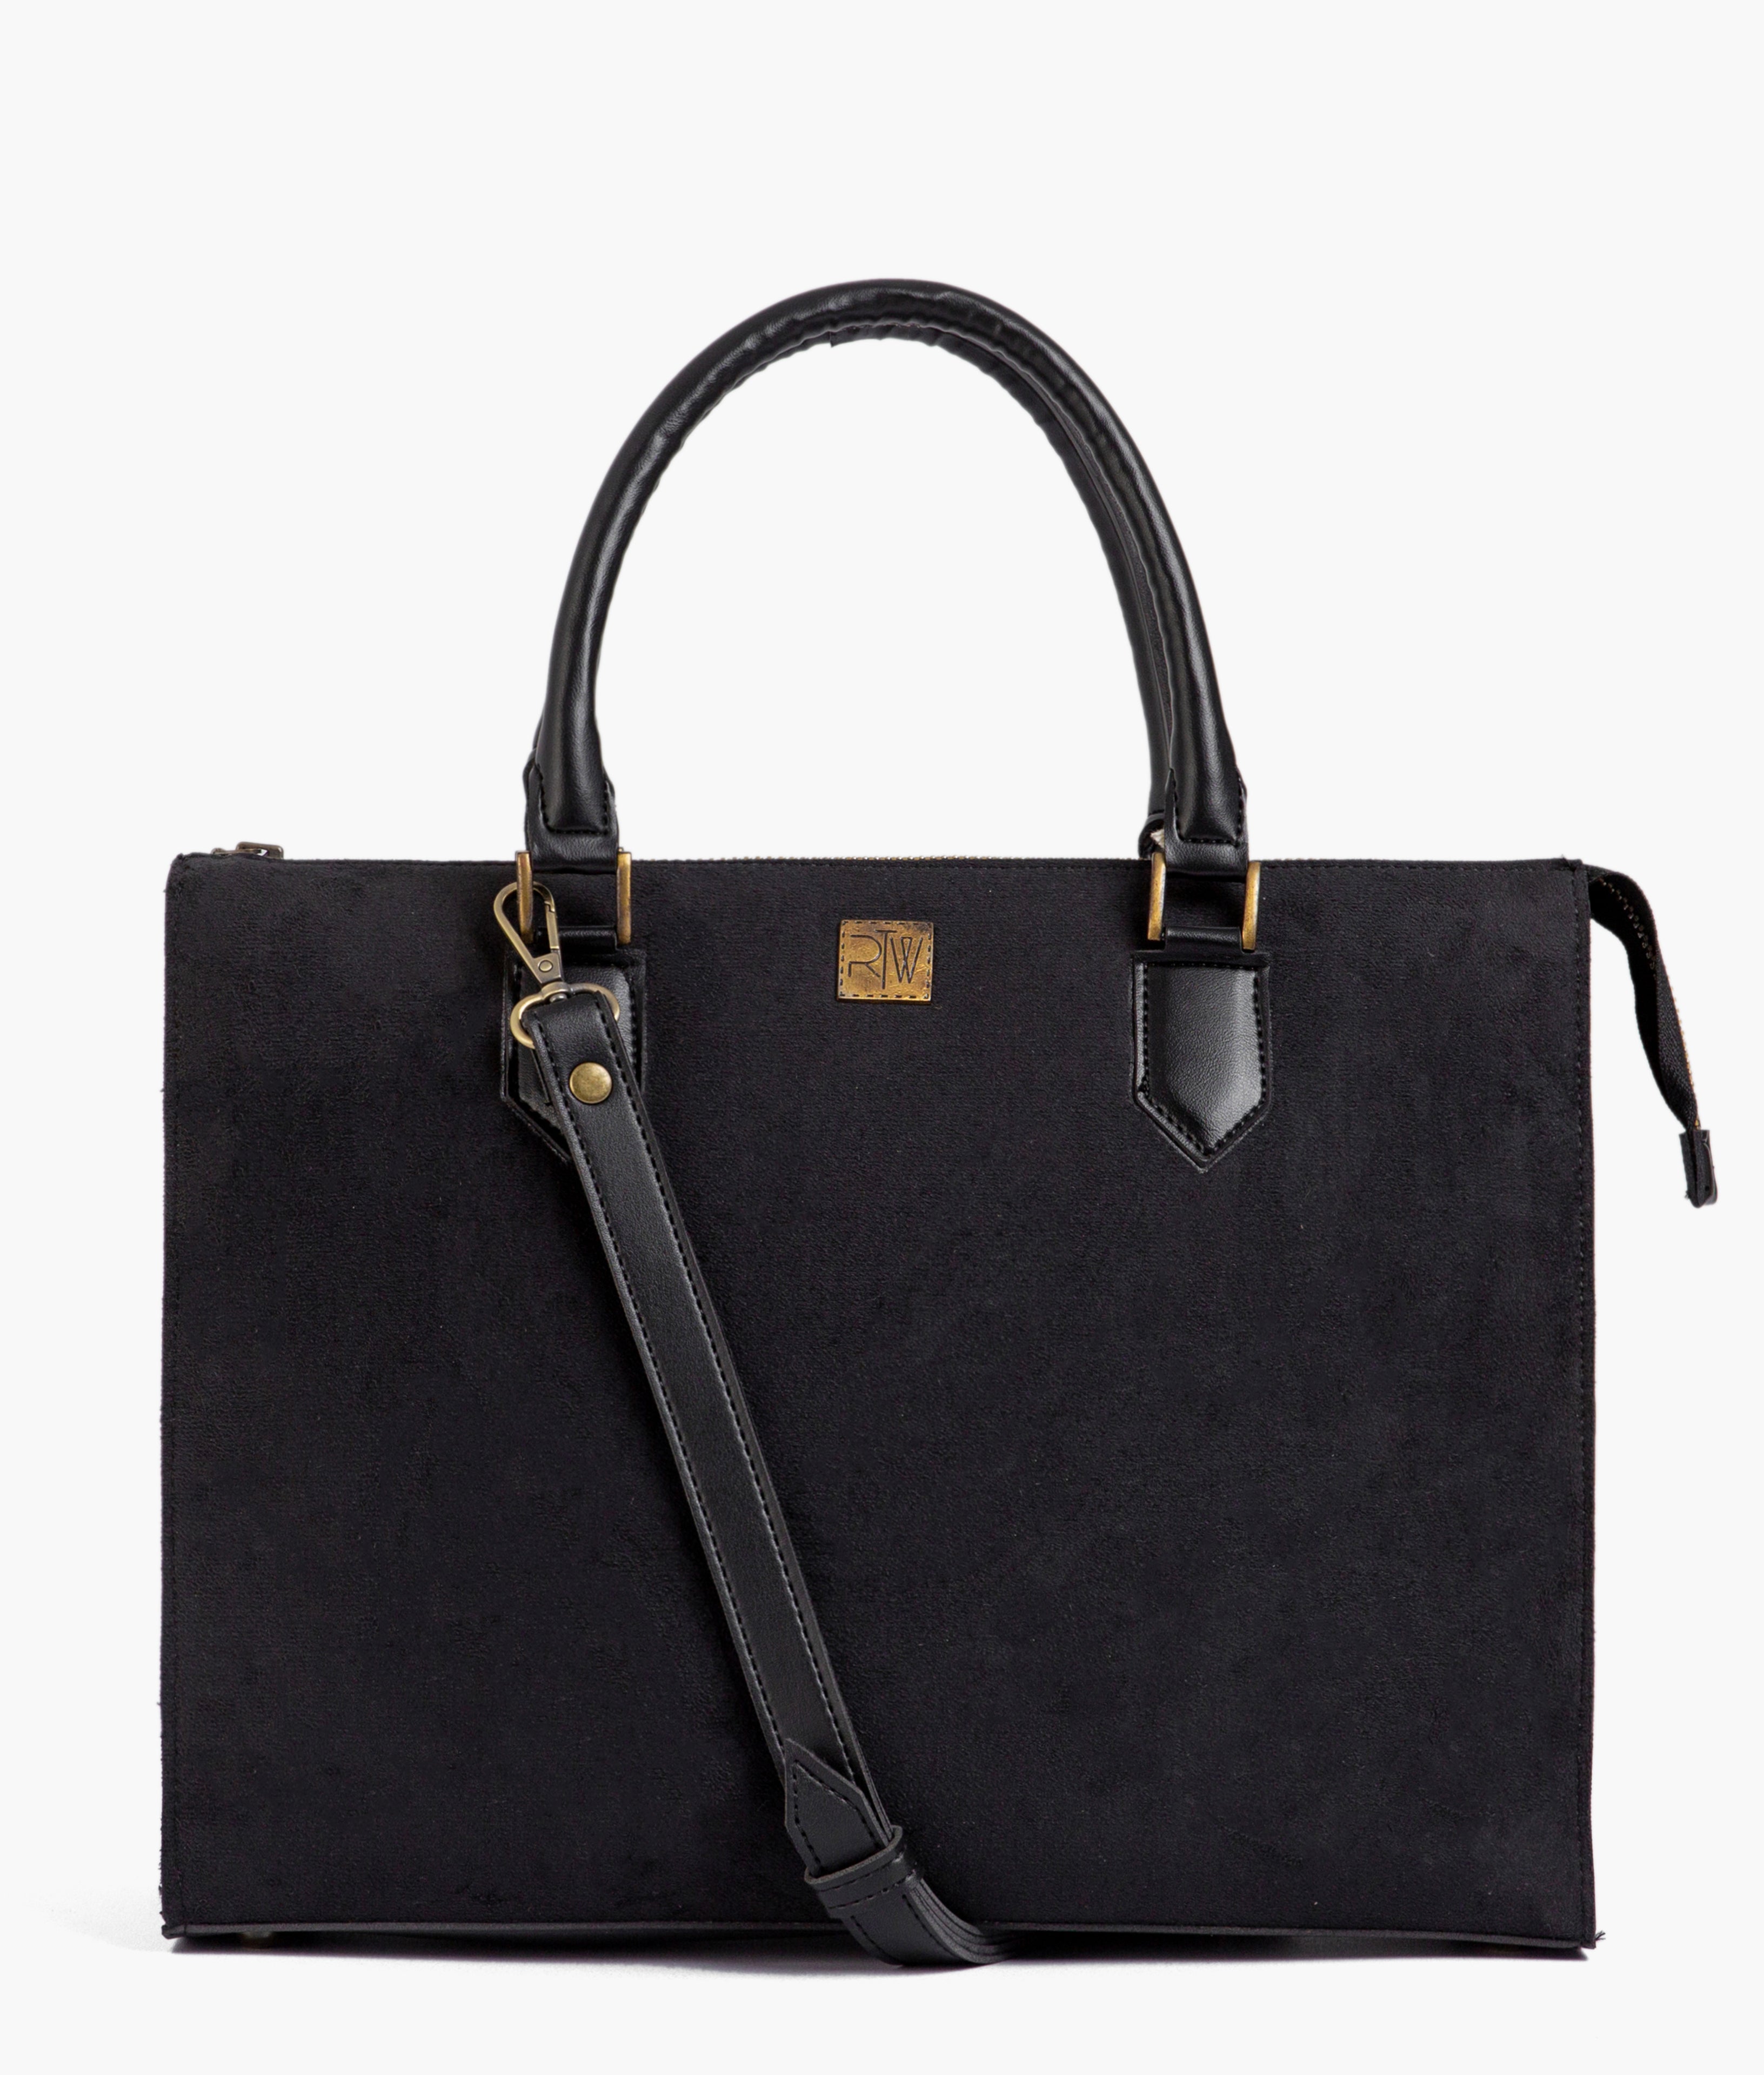 RTW - Black suede workplace handbag